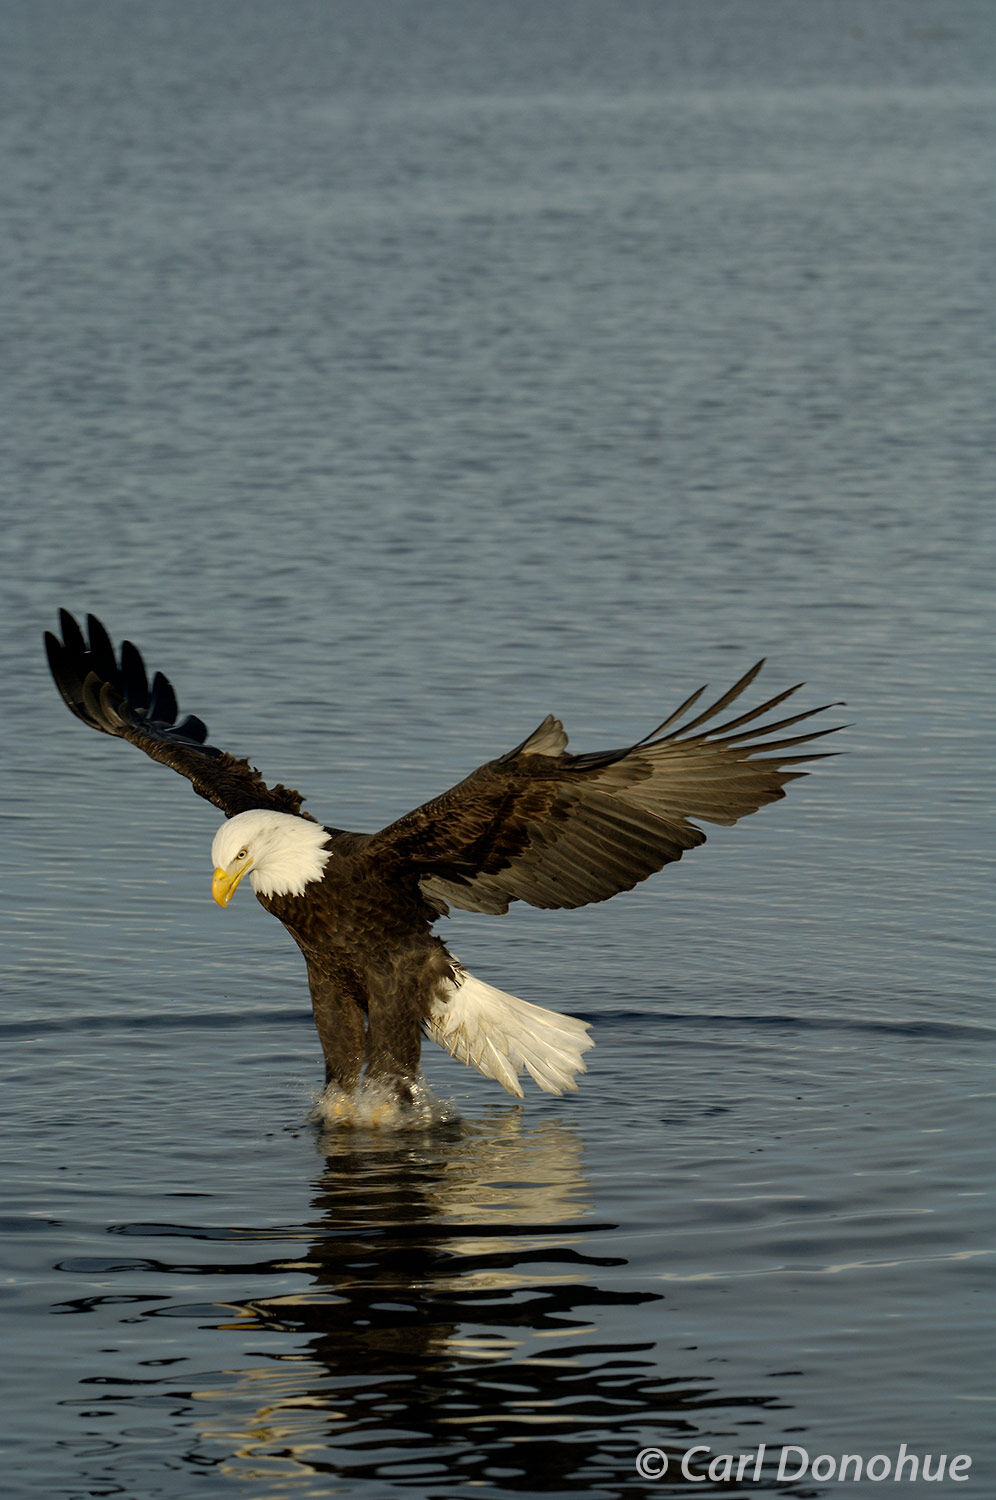 A mature bald eagle successfully snags a fish in its talons in Kachemak Bay, near Homer Alaska. Bald eagle fishing in Kachemak...